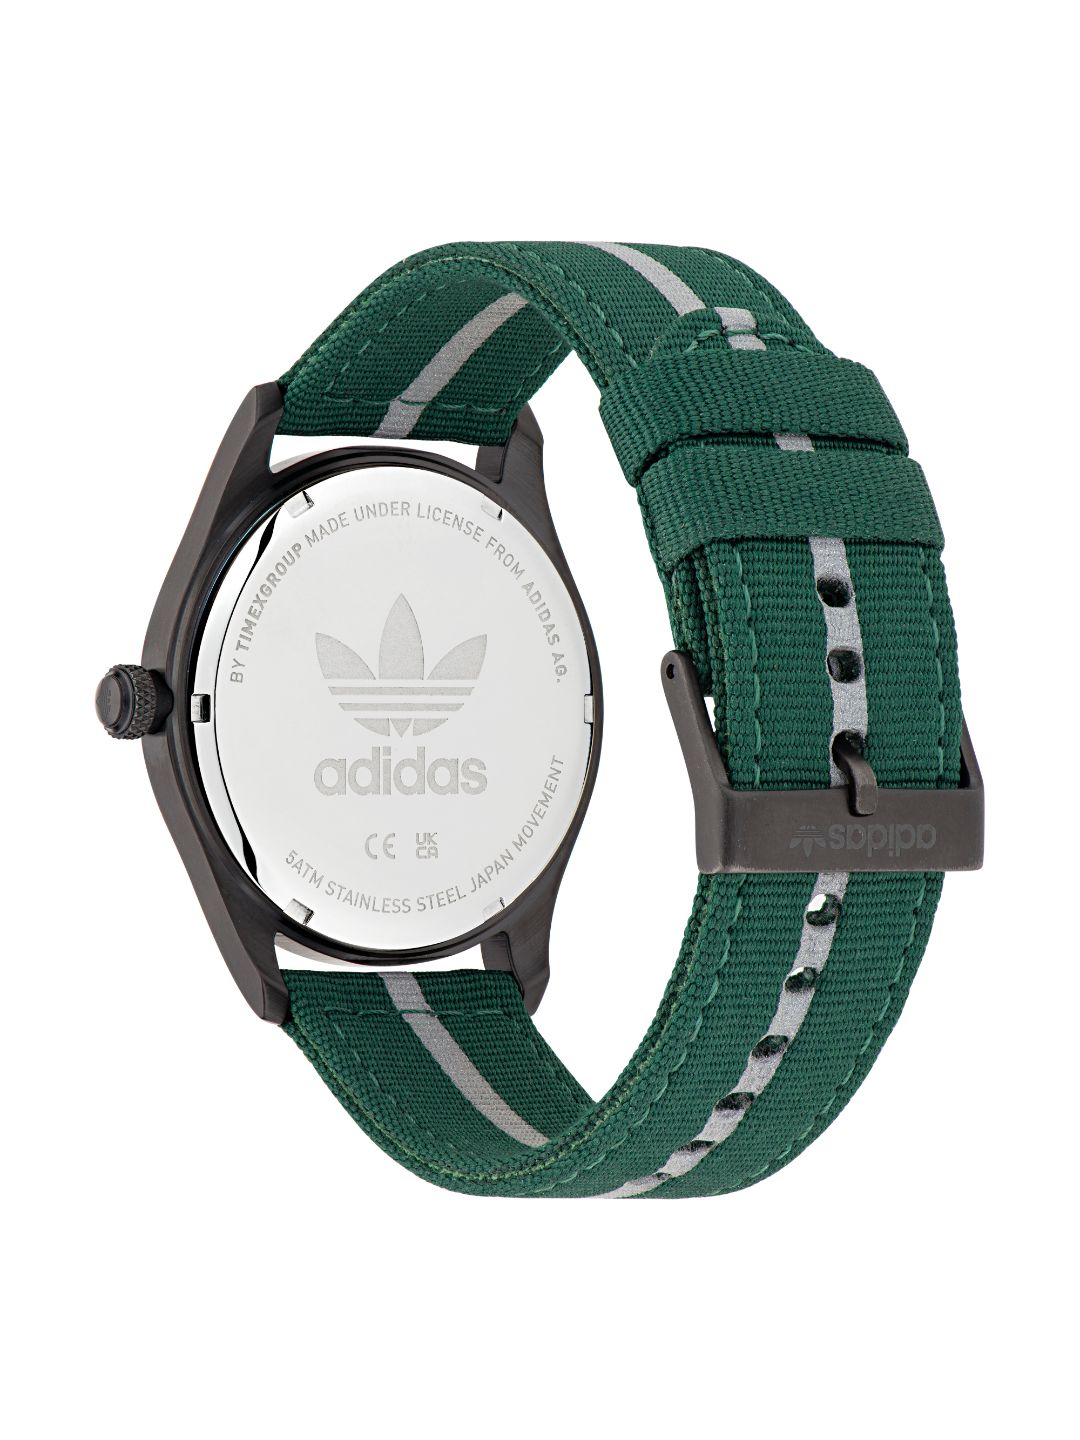 Adidas Originals White Dial Unisex Watch - AOSY23042